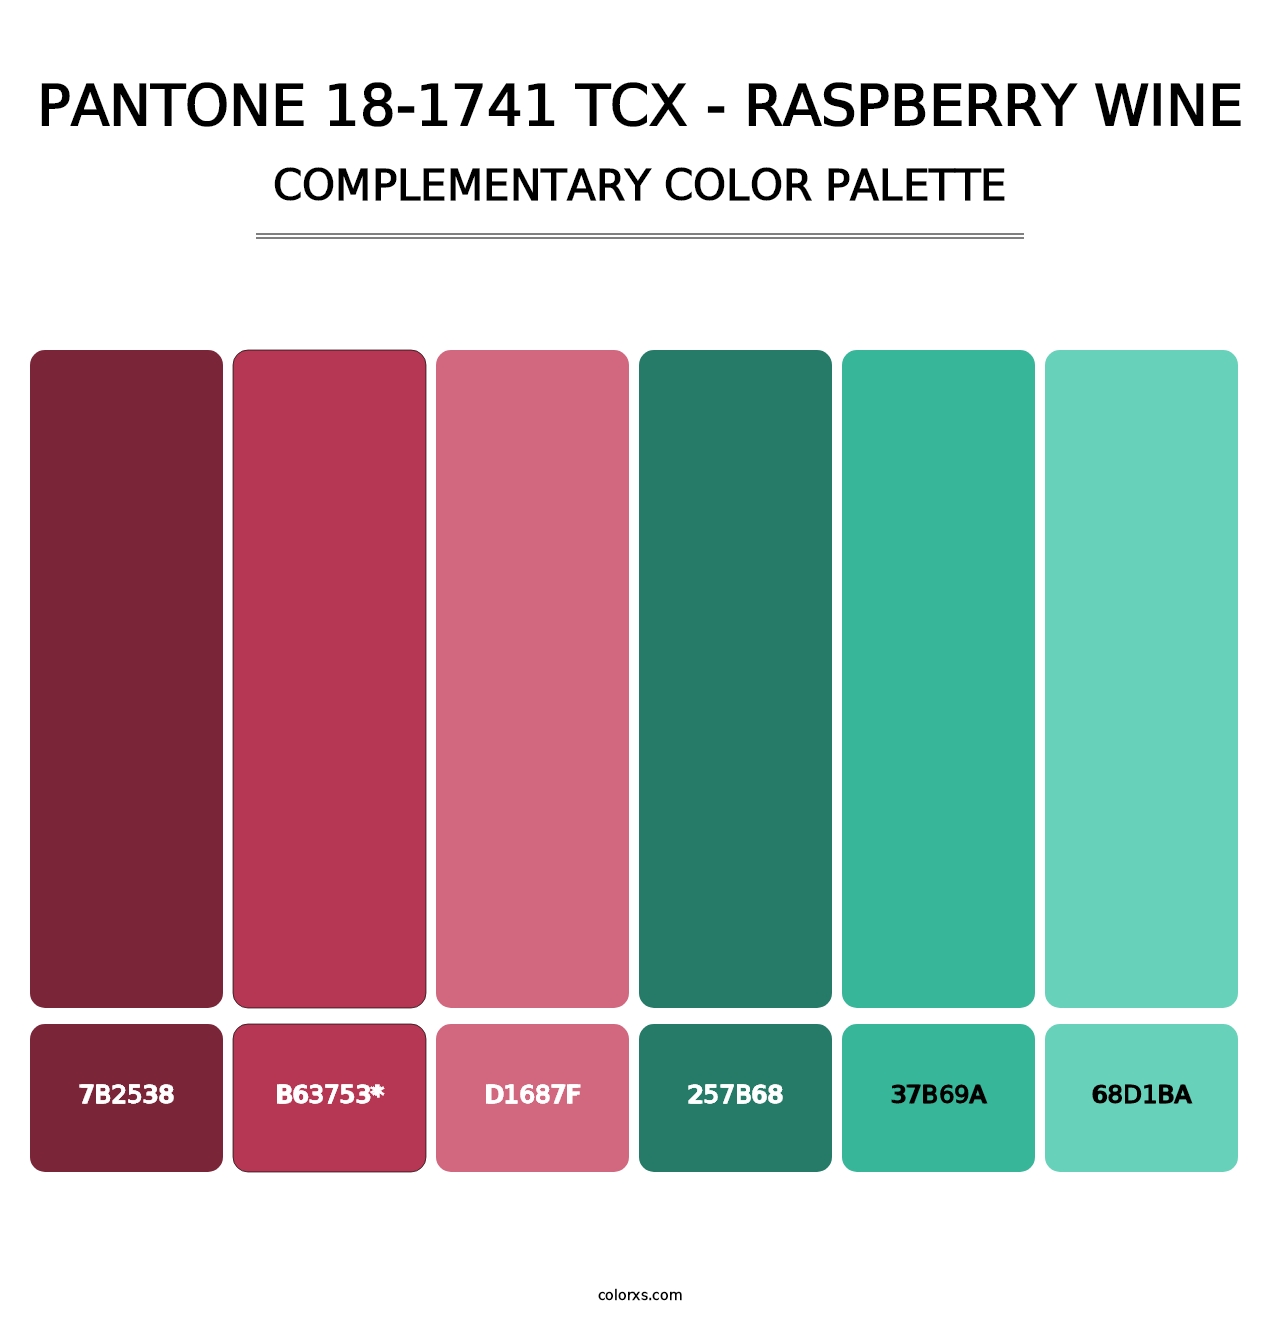 PANTONE 18-1741 TCX - Raspberry Wine - Complementary Color Palette